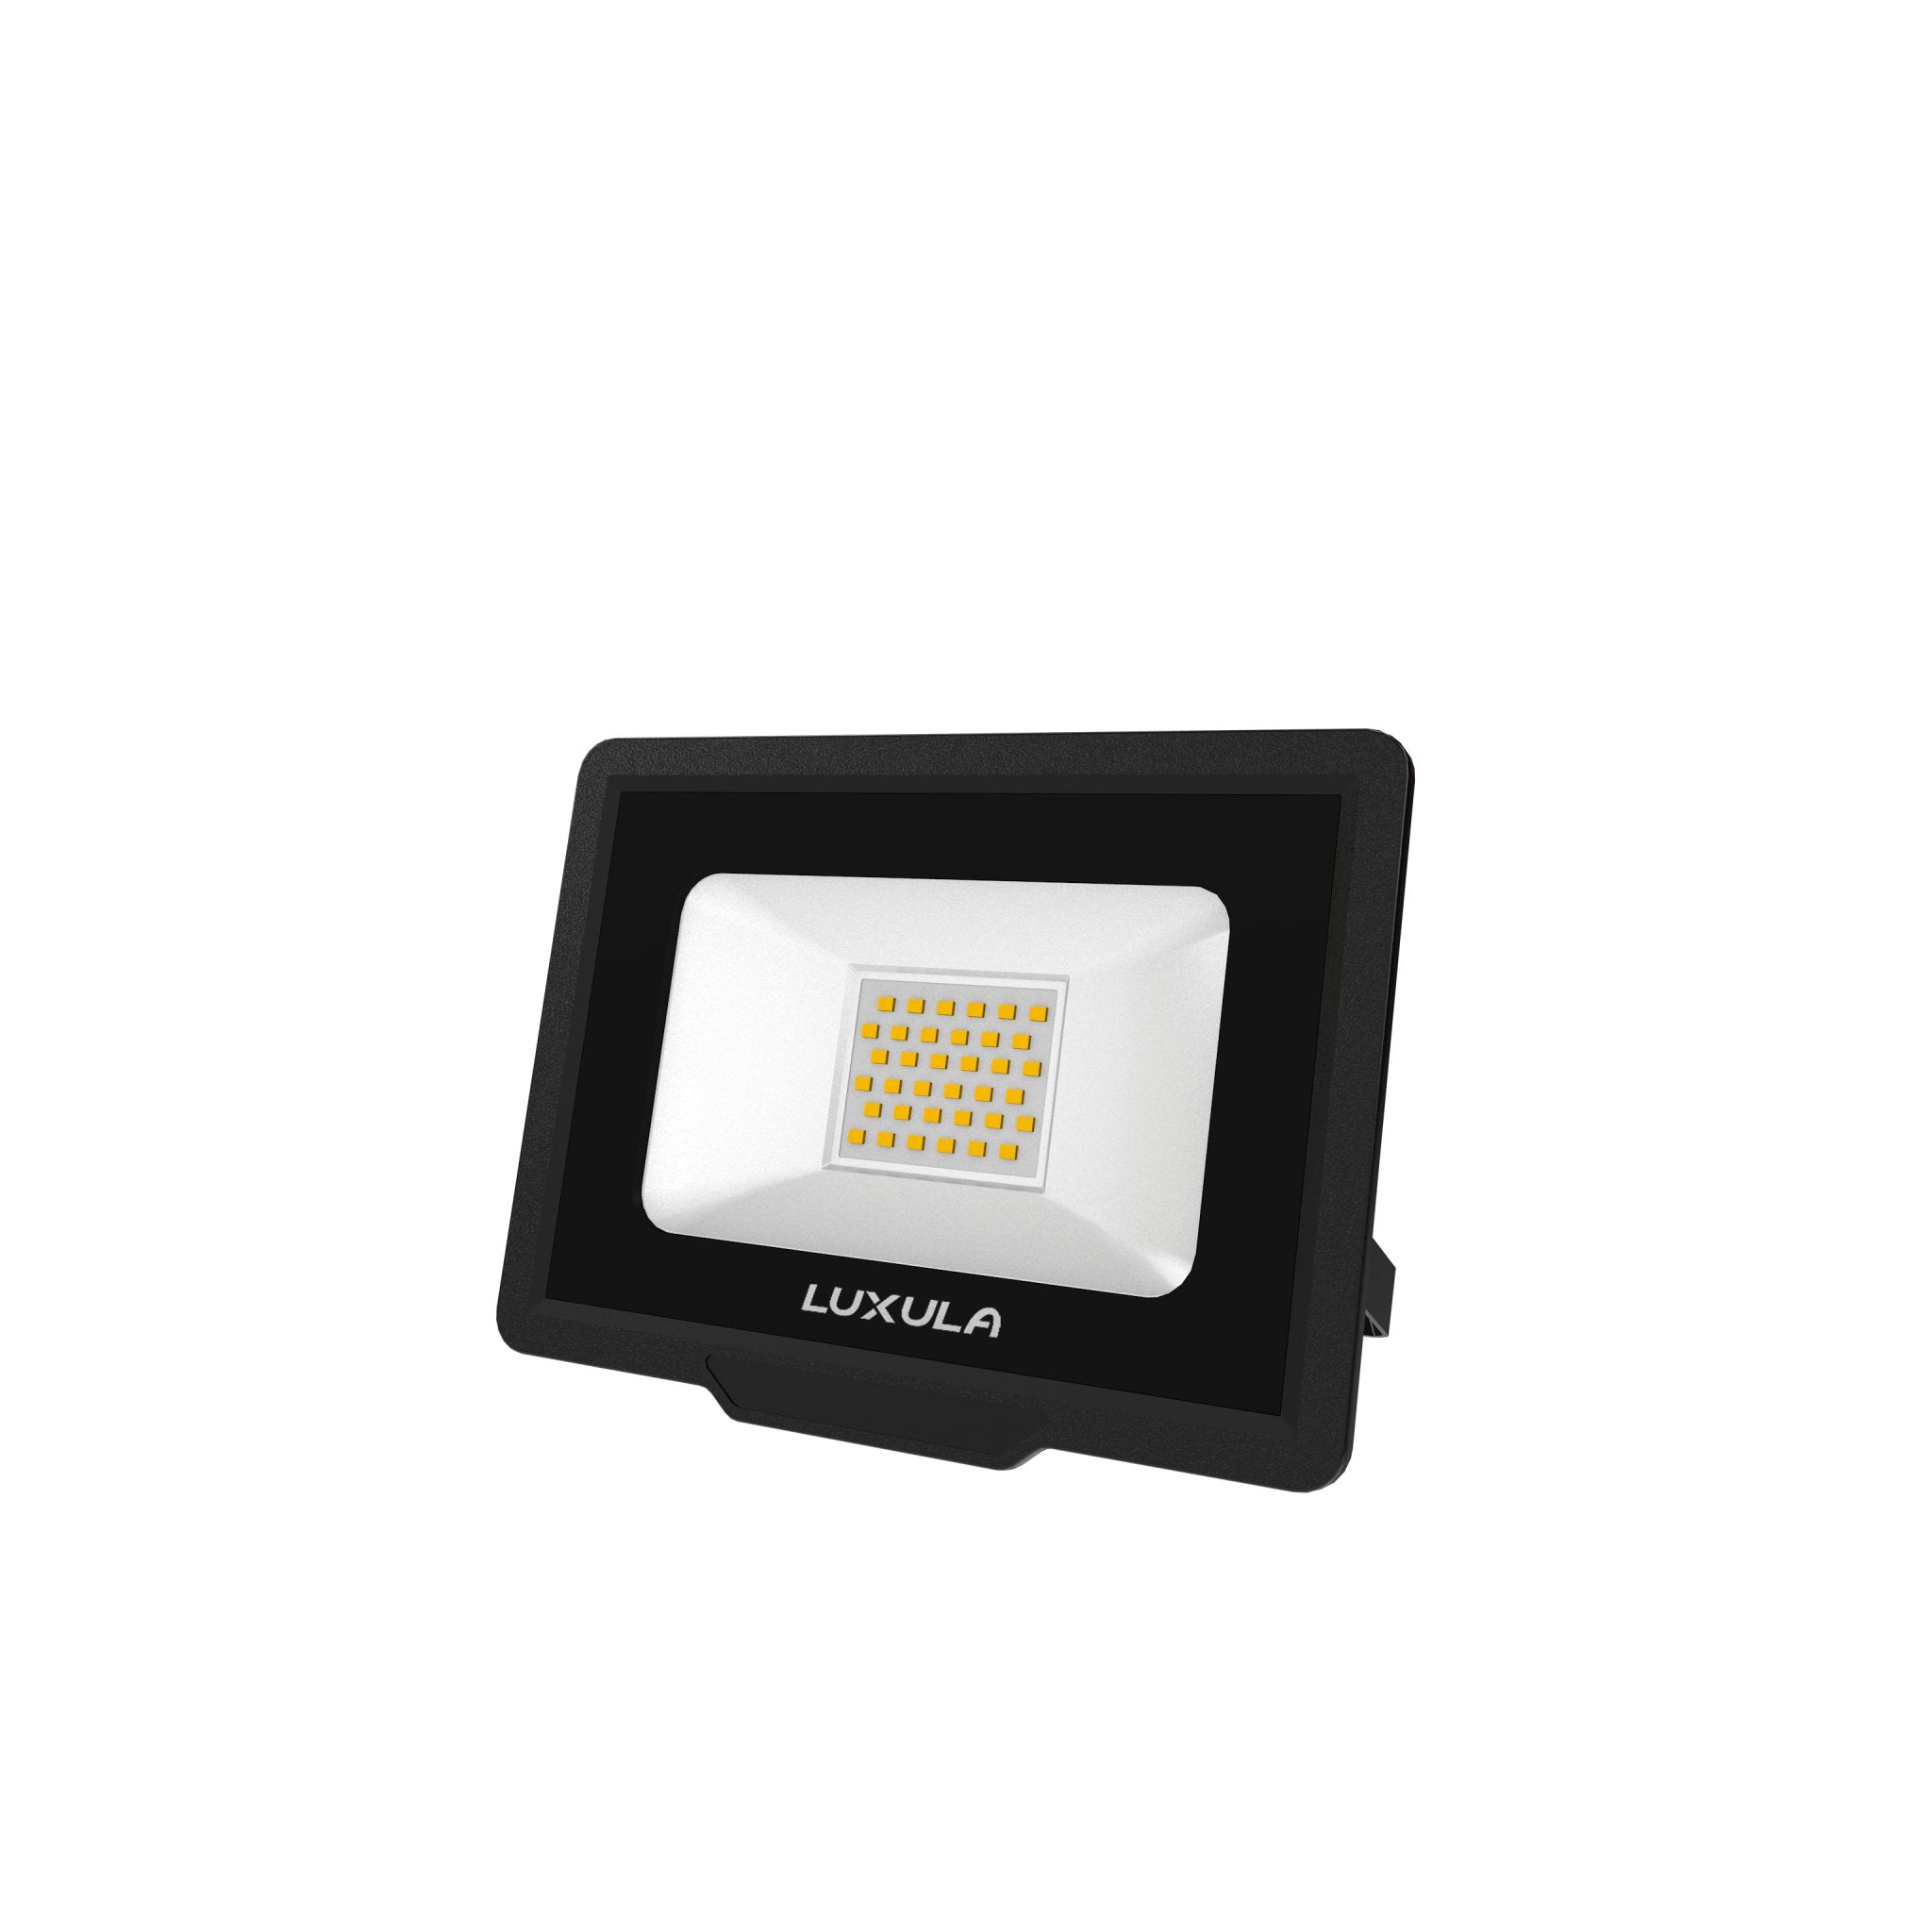 30 TÜV-geprüft lm, – schwarz, LED-Fluter, (warmweiß), IP65, 3000 W, 3000 K